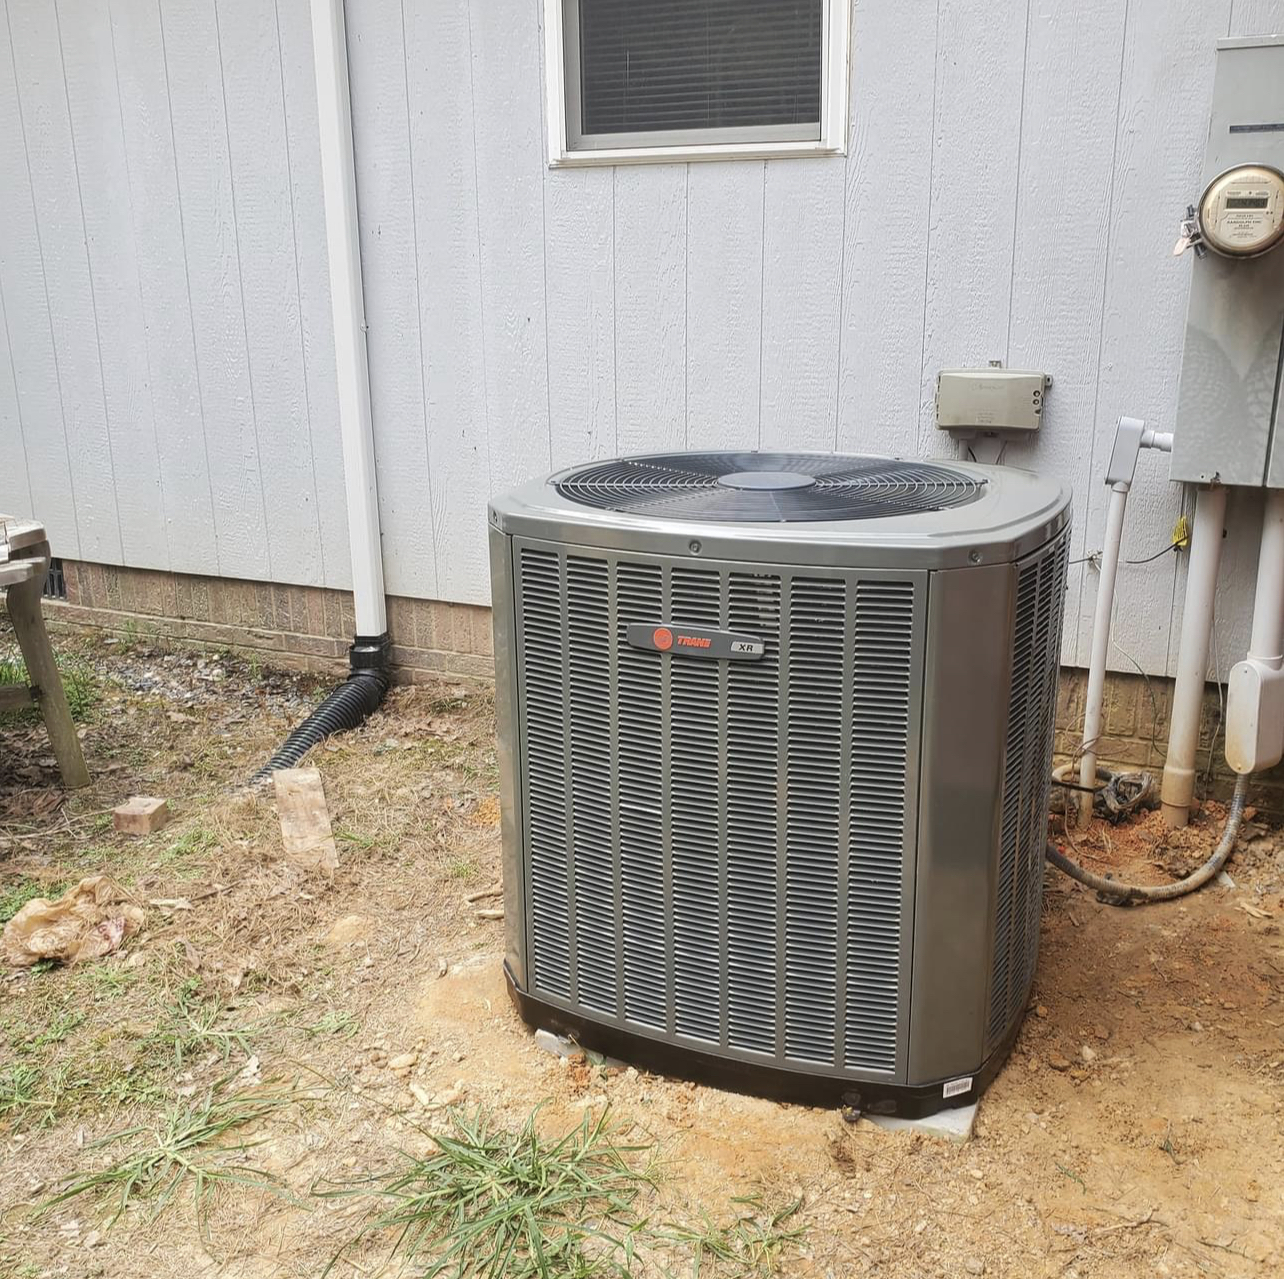 Sanders Heating & Cooling 890 N Main St, Troy North Carolina 27371